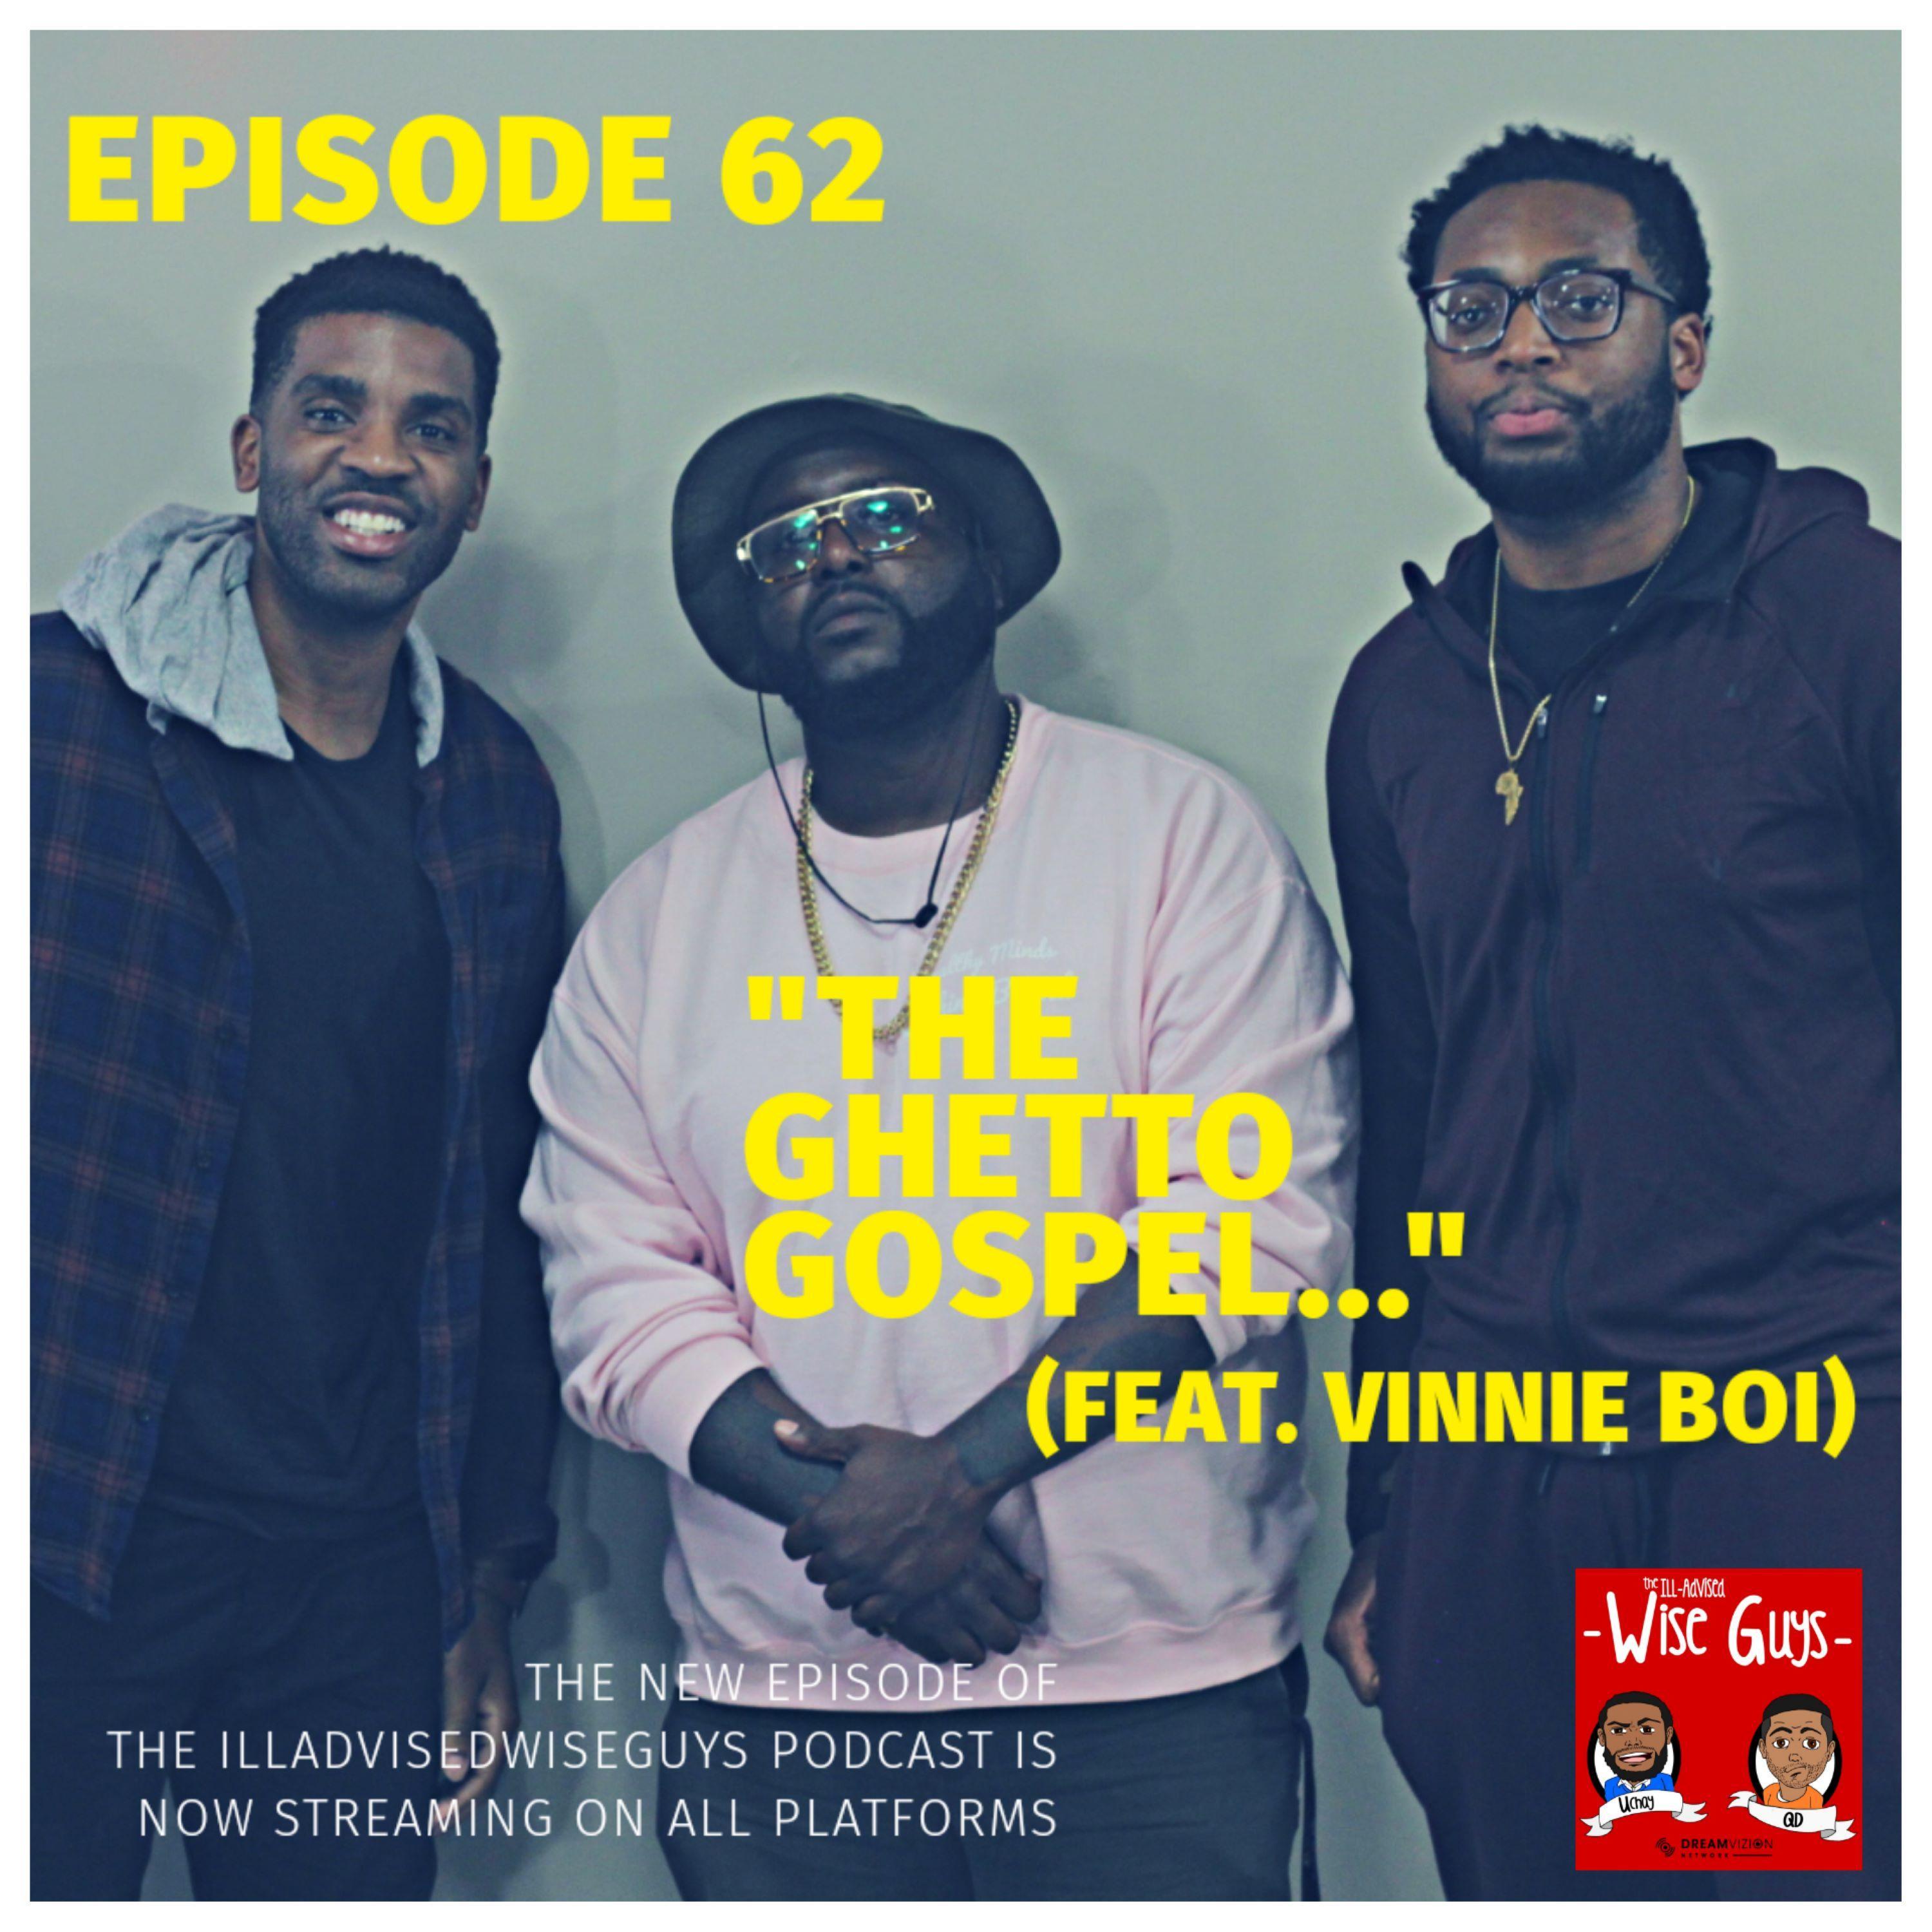 Episode 62 - "The Ghetto Gospel..." (Feat. Vinnie Boi) Image